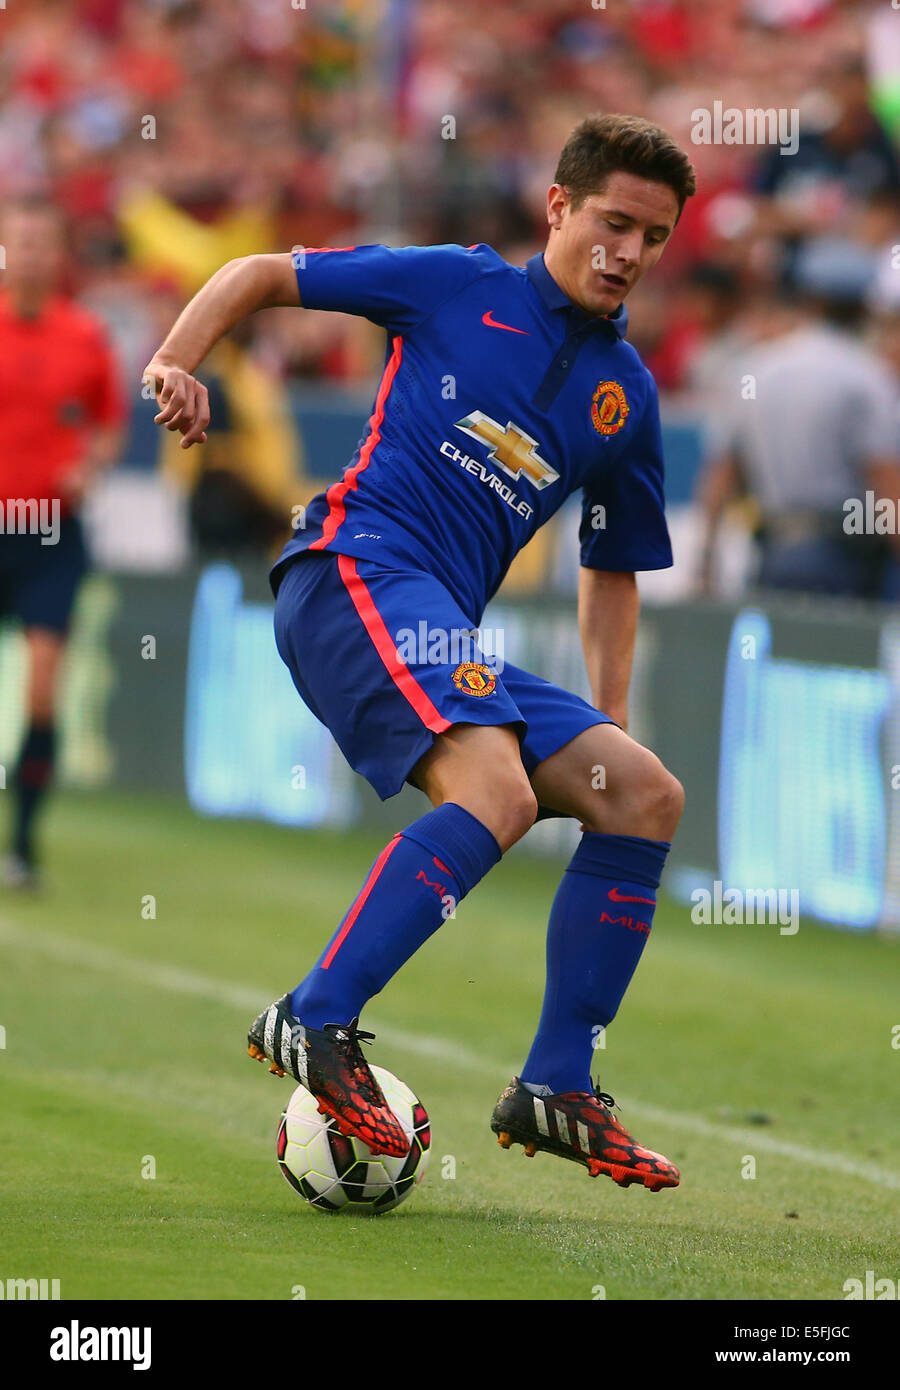 SoccerStarz Manchester United Ander Herrera Home Kit 2014-15